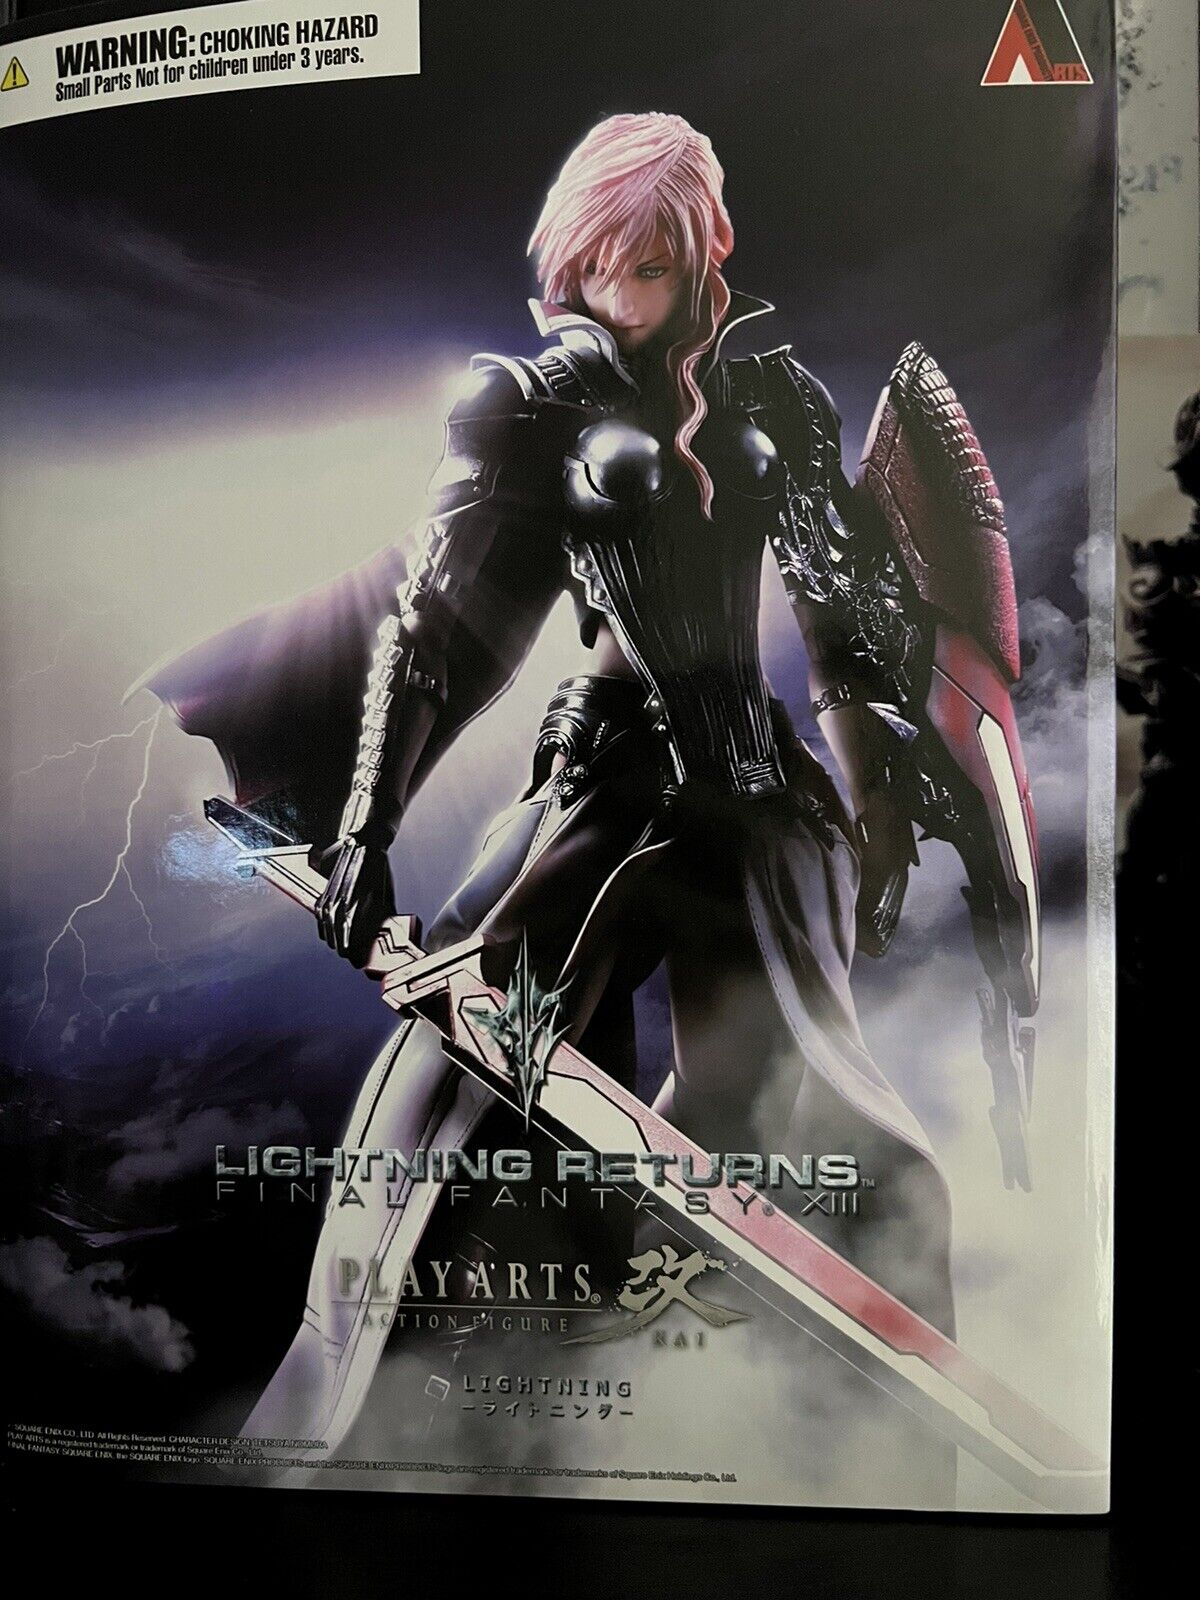 Final Fantasy XIII Lightning Returns Play Arts Kai Action Figure